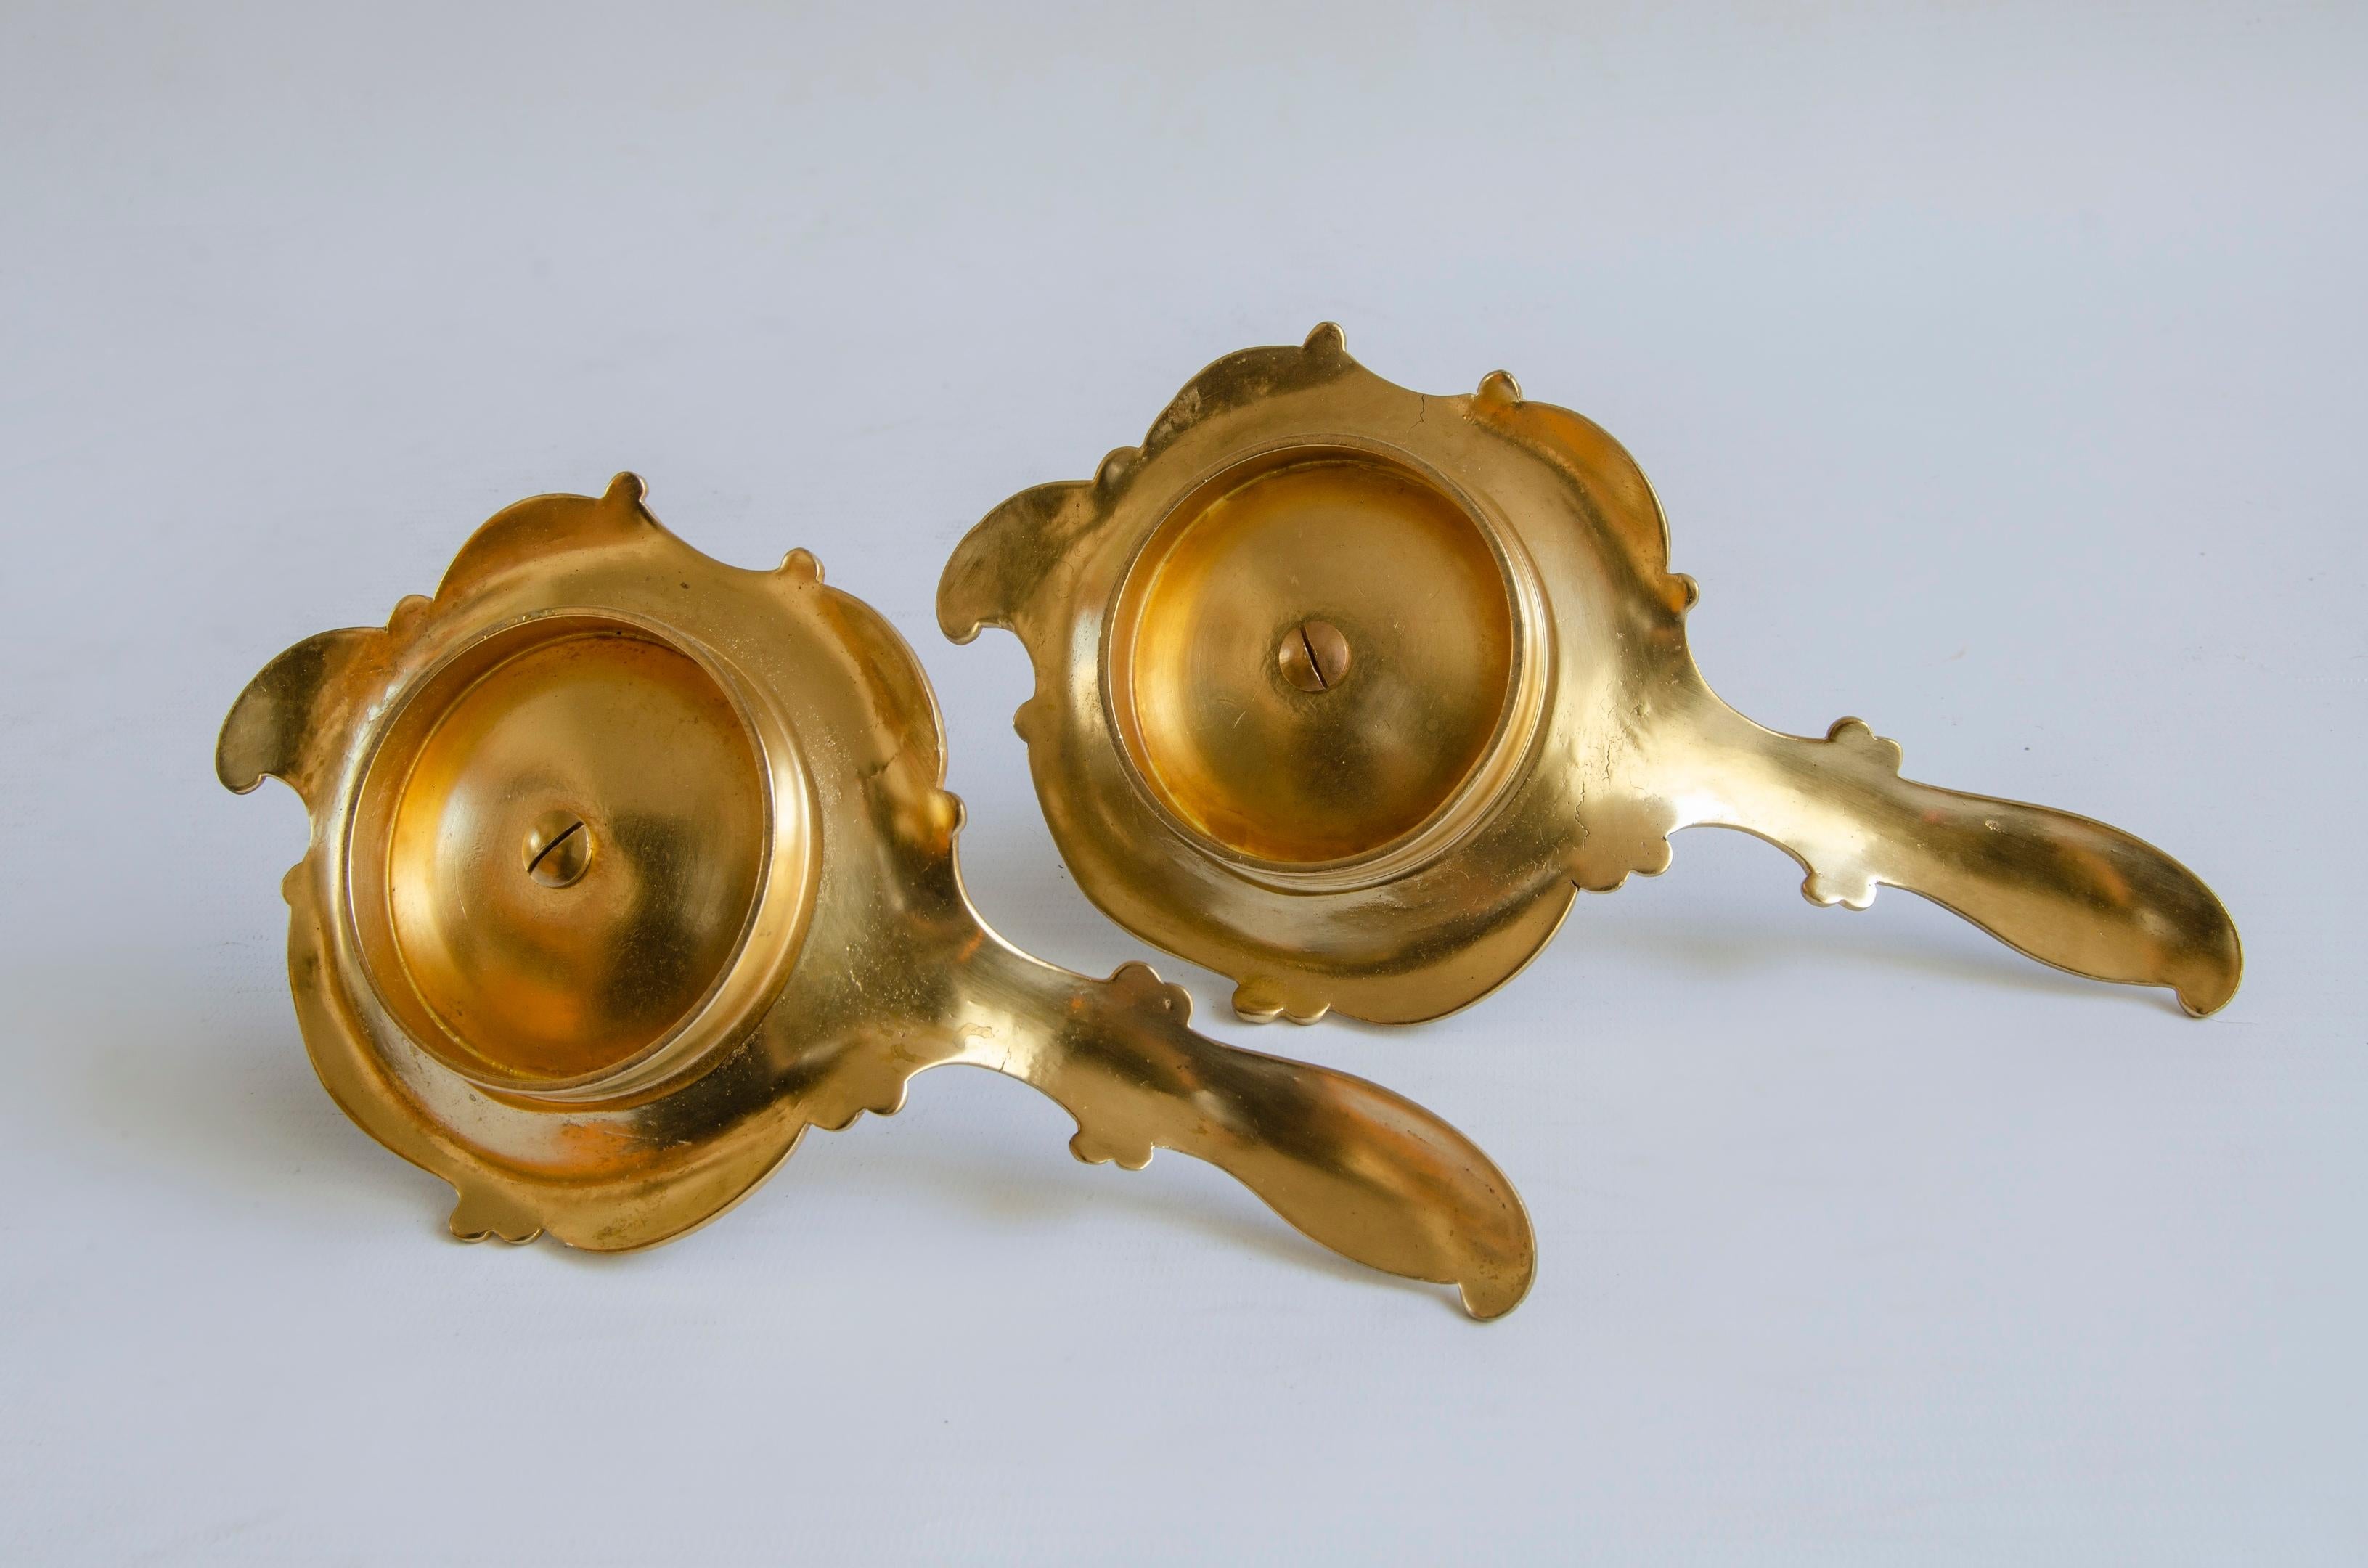 Pair of candlesticks Napoleon III
circa 1900
gilt bronze and champleve enamel
Origin France perfect condition.